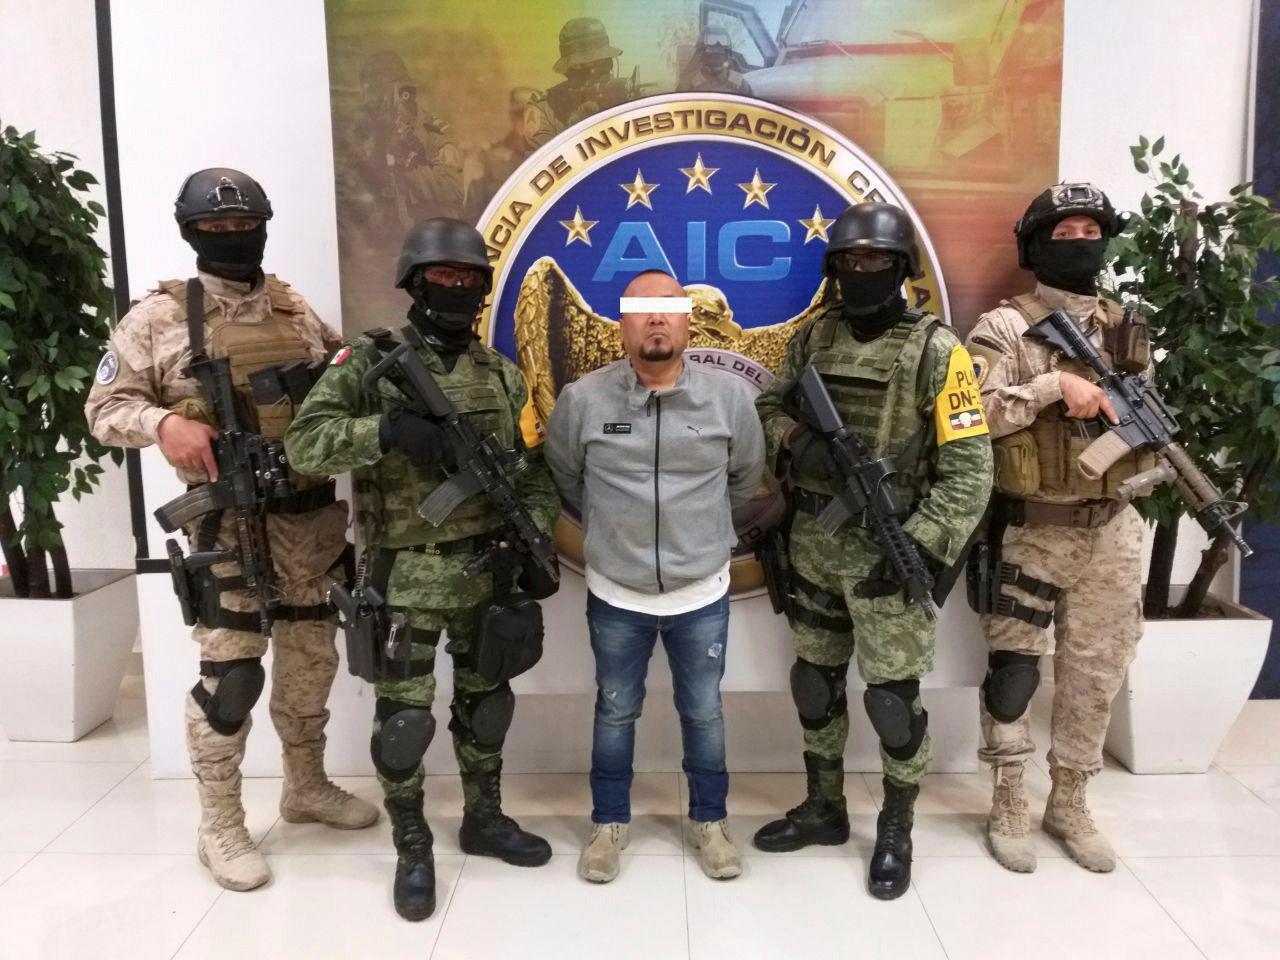 Mexican cartel boss’ arrest raises old suspicions of drug alms